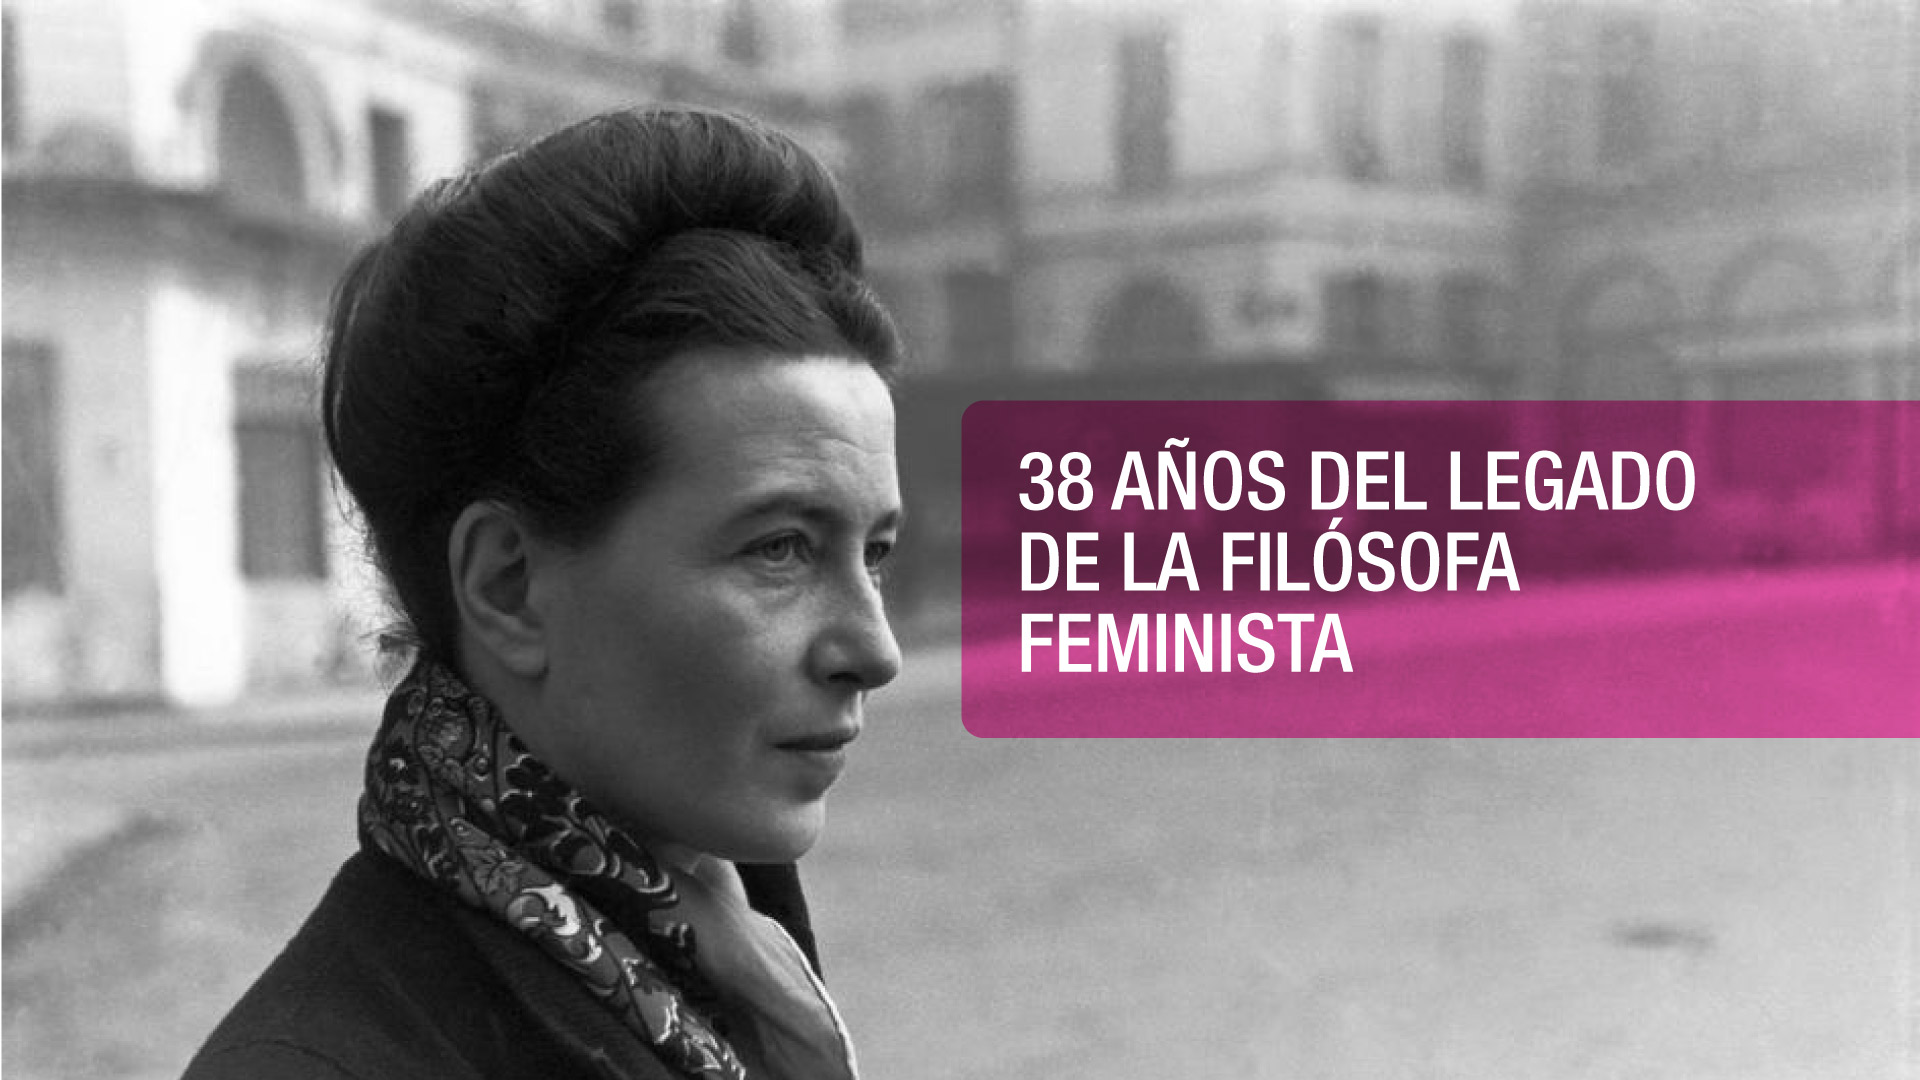 La mujer que sembró semillas de feminismo y libertad: Simone de Beauvoir